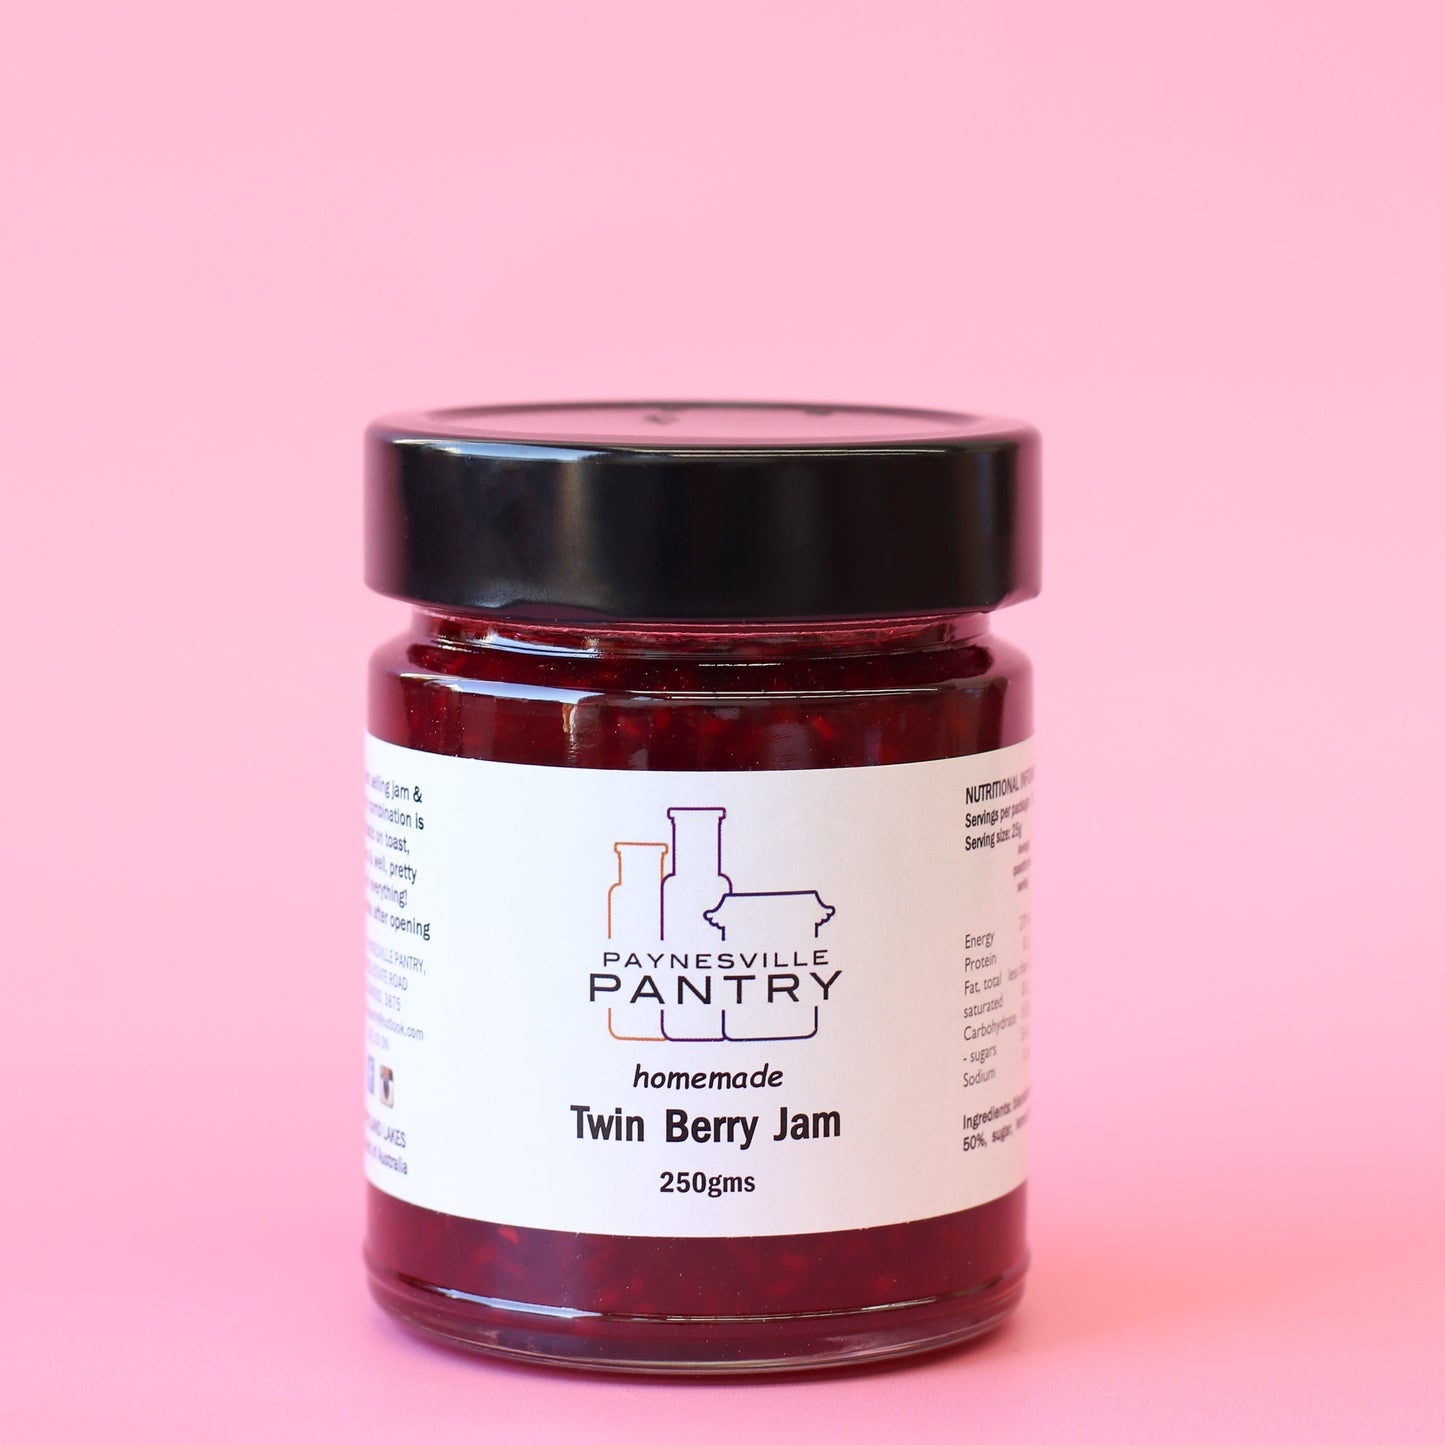 Paynesville Pantry Twin Berry Jam 250g